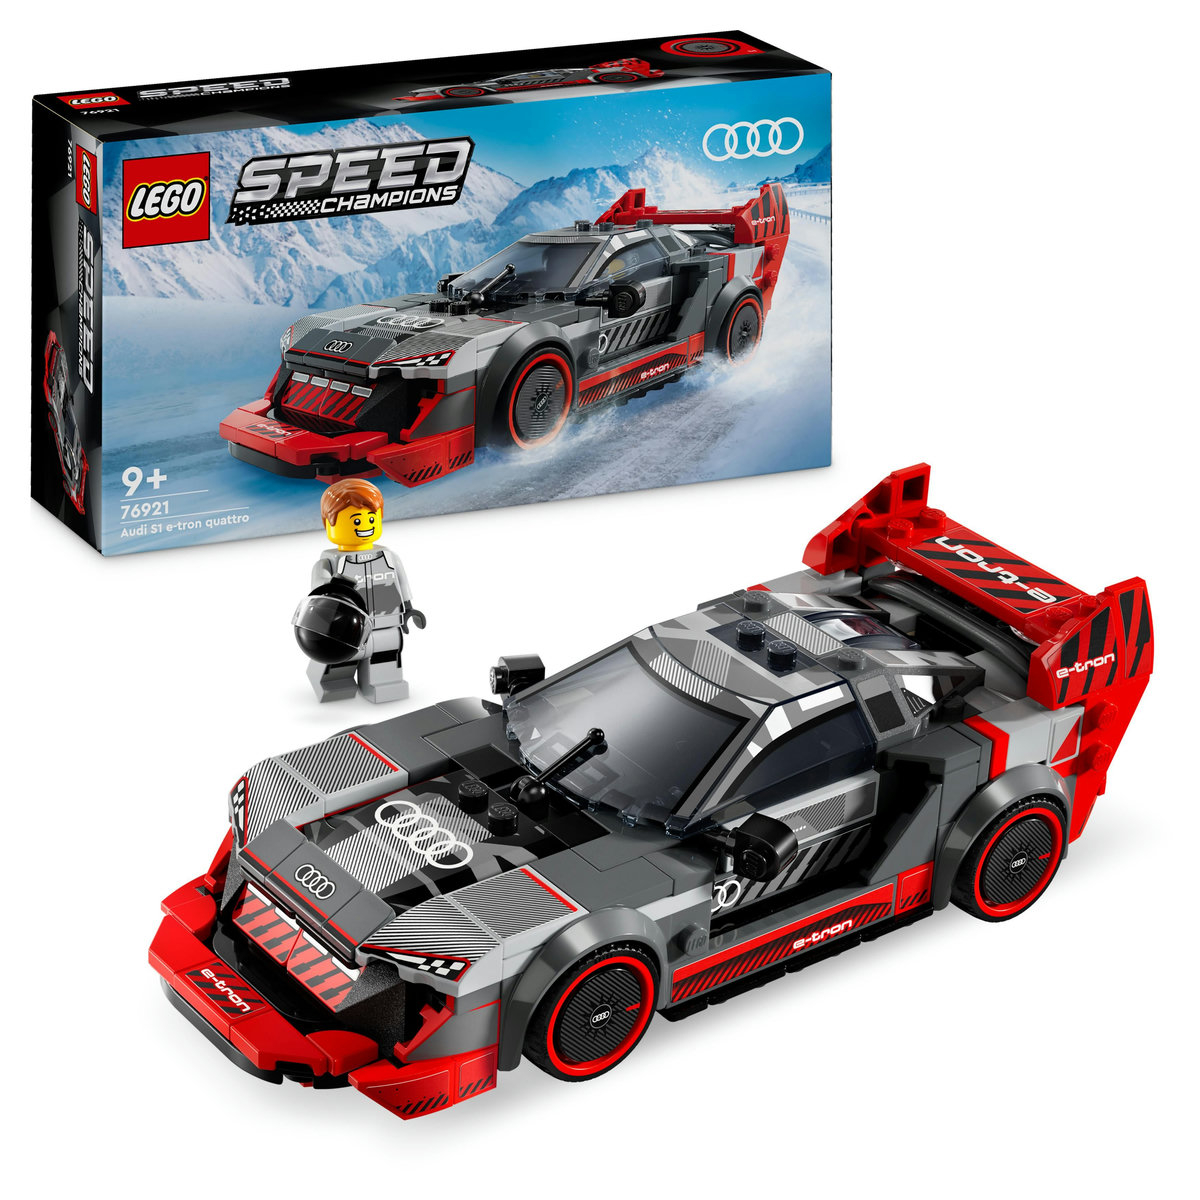 LEGO Speed Champions - Masina de curse Audi S1 E-Tron Quattro 76921, 274 piese